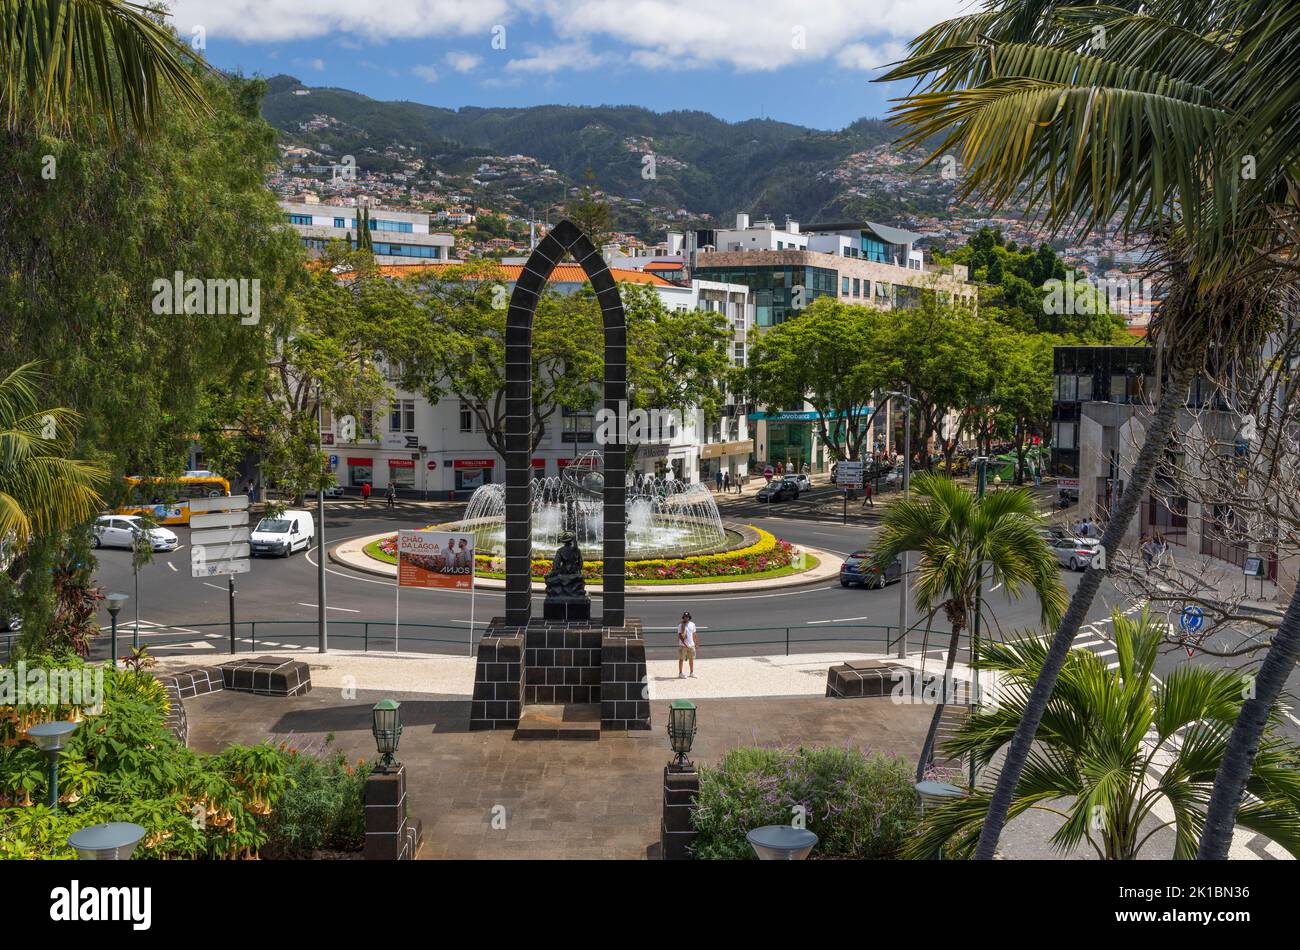 Rotunda do Infante roundabout, Funchal, Madeira, Portugal Stock Photo